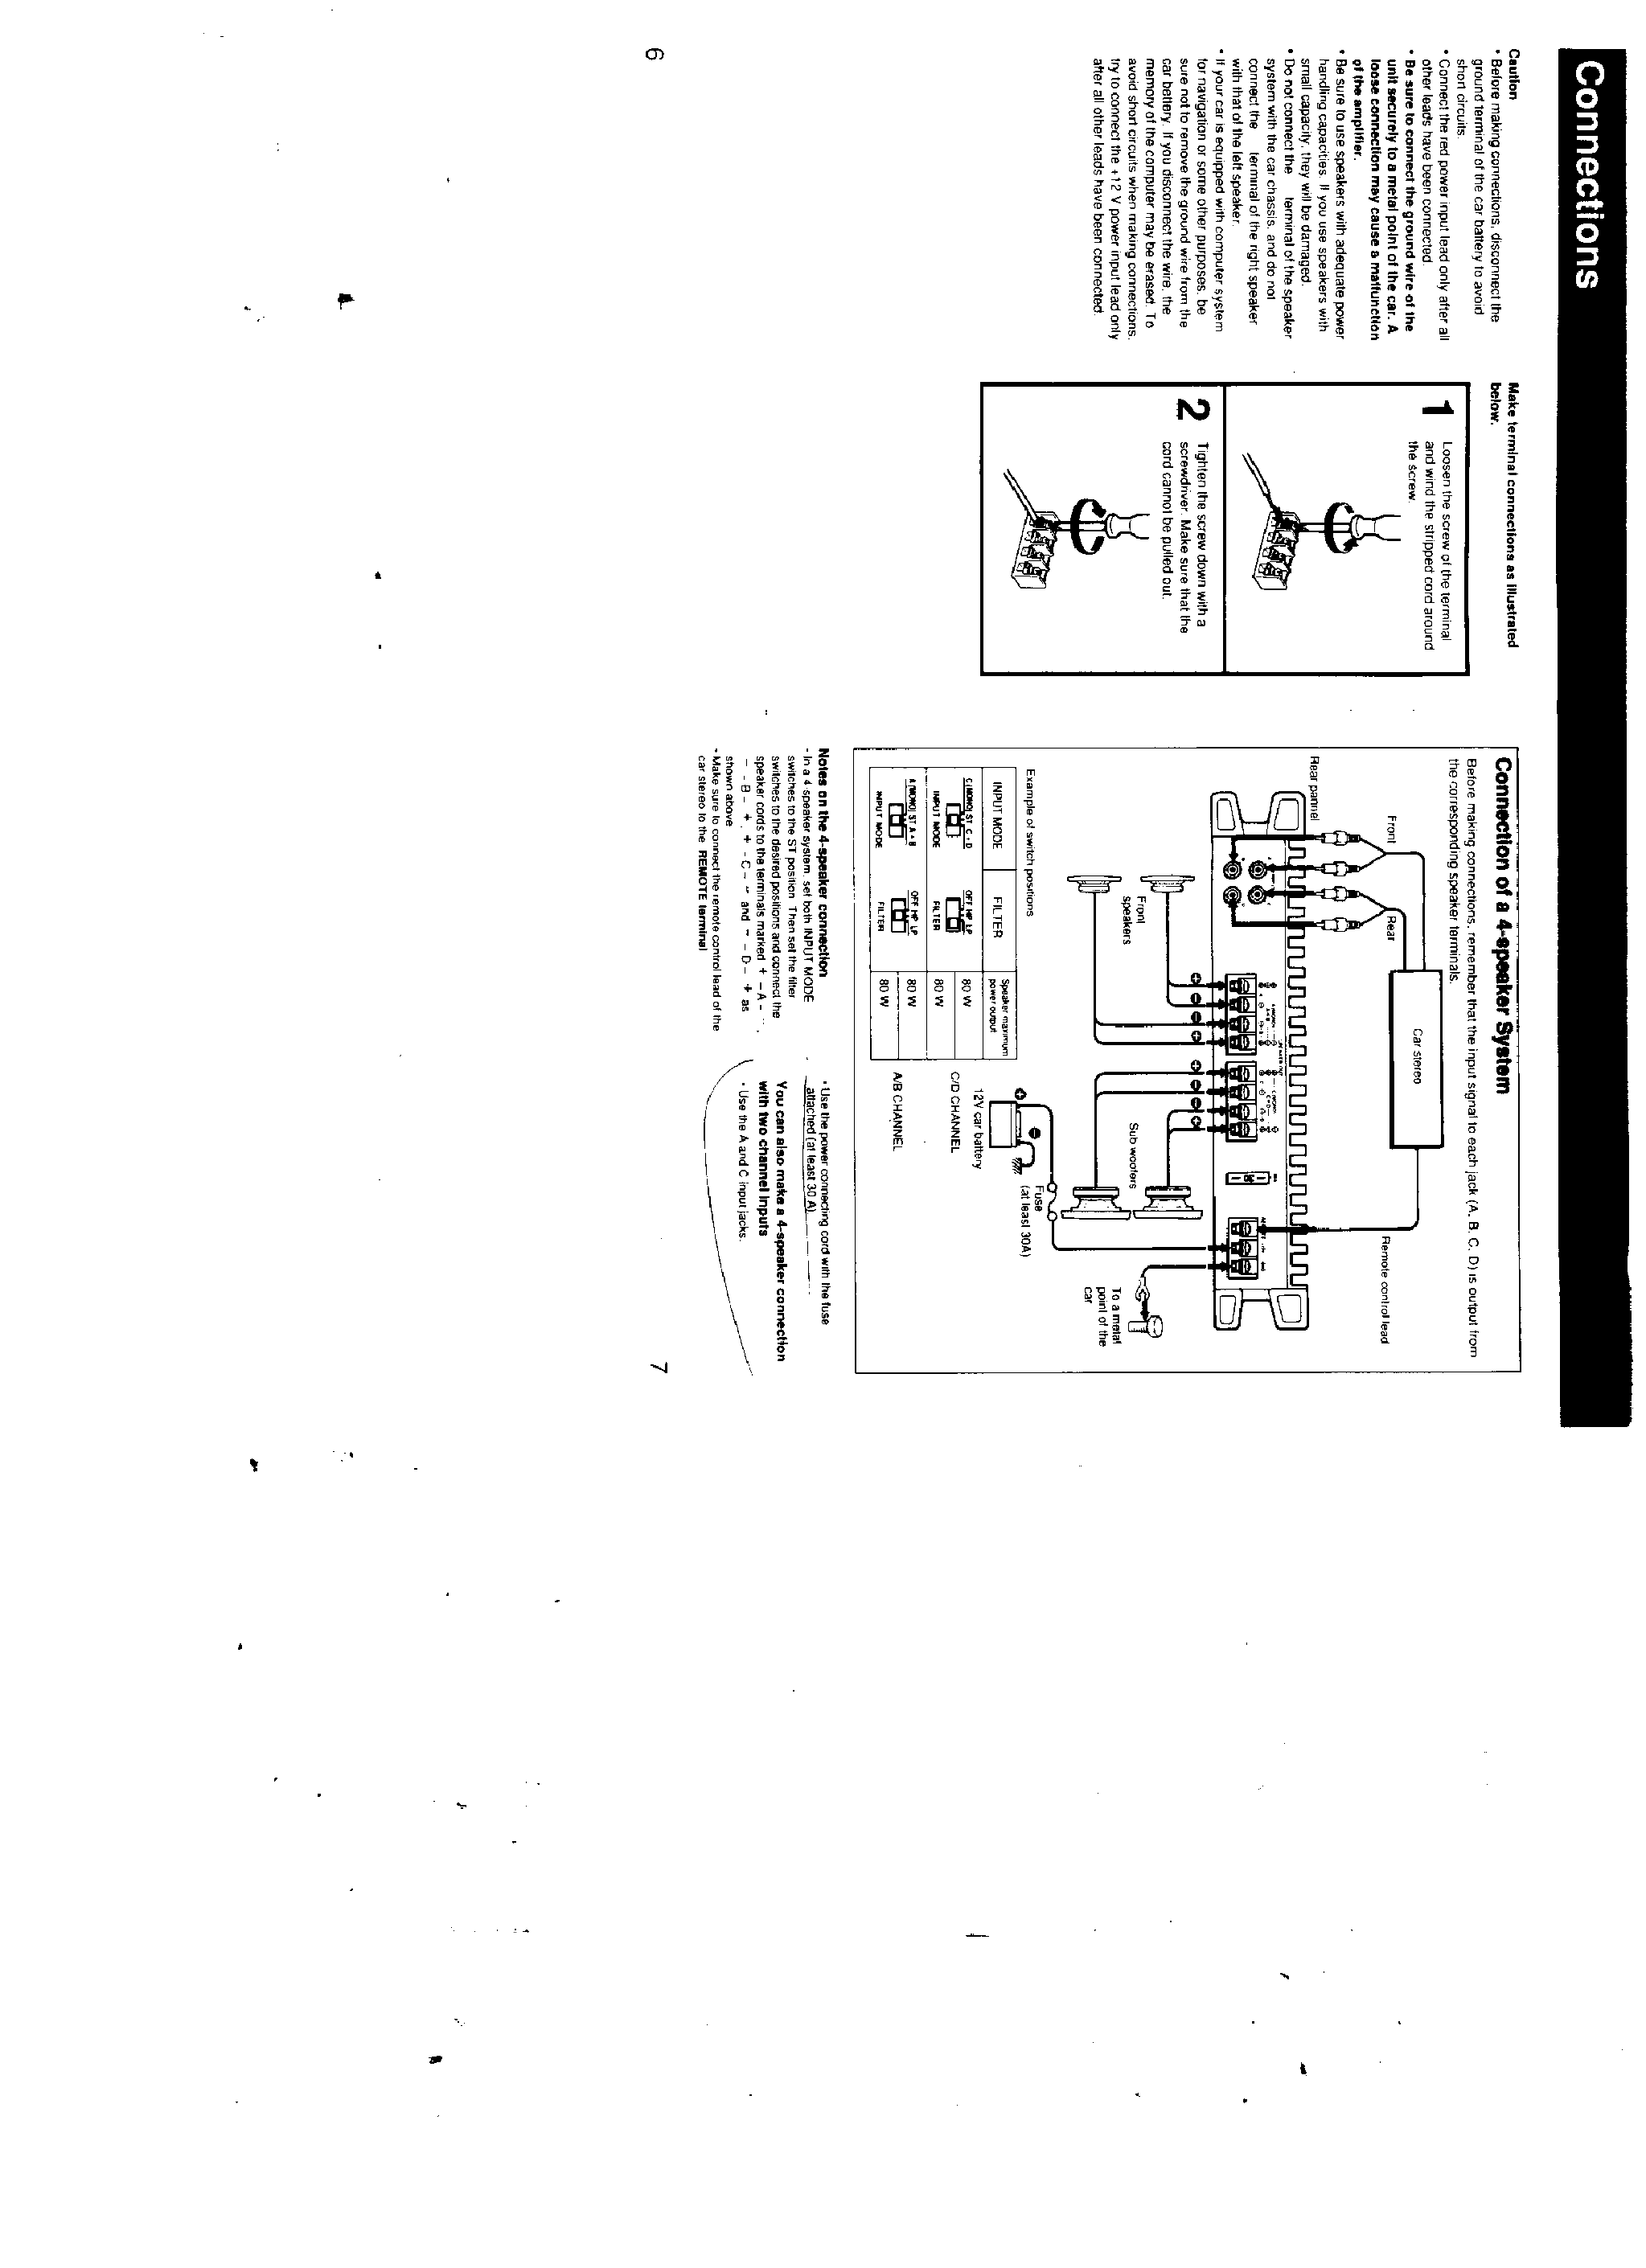 Electrolux w3330n manual user